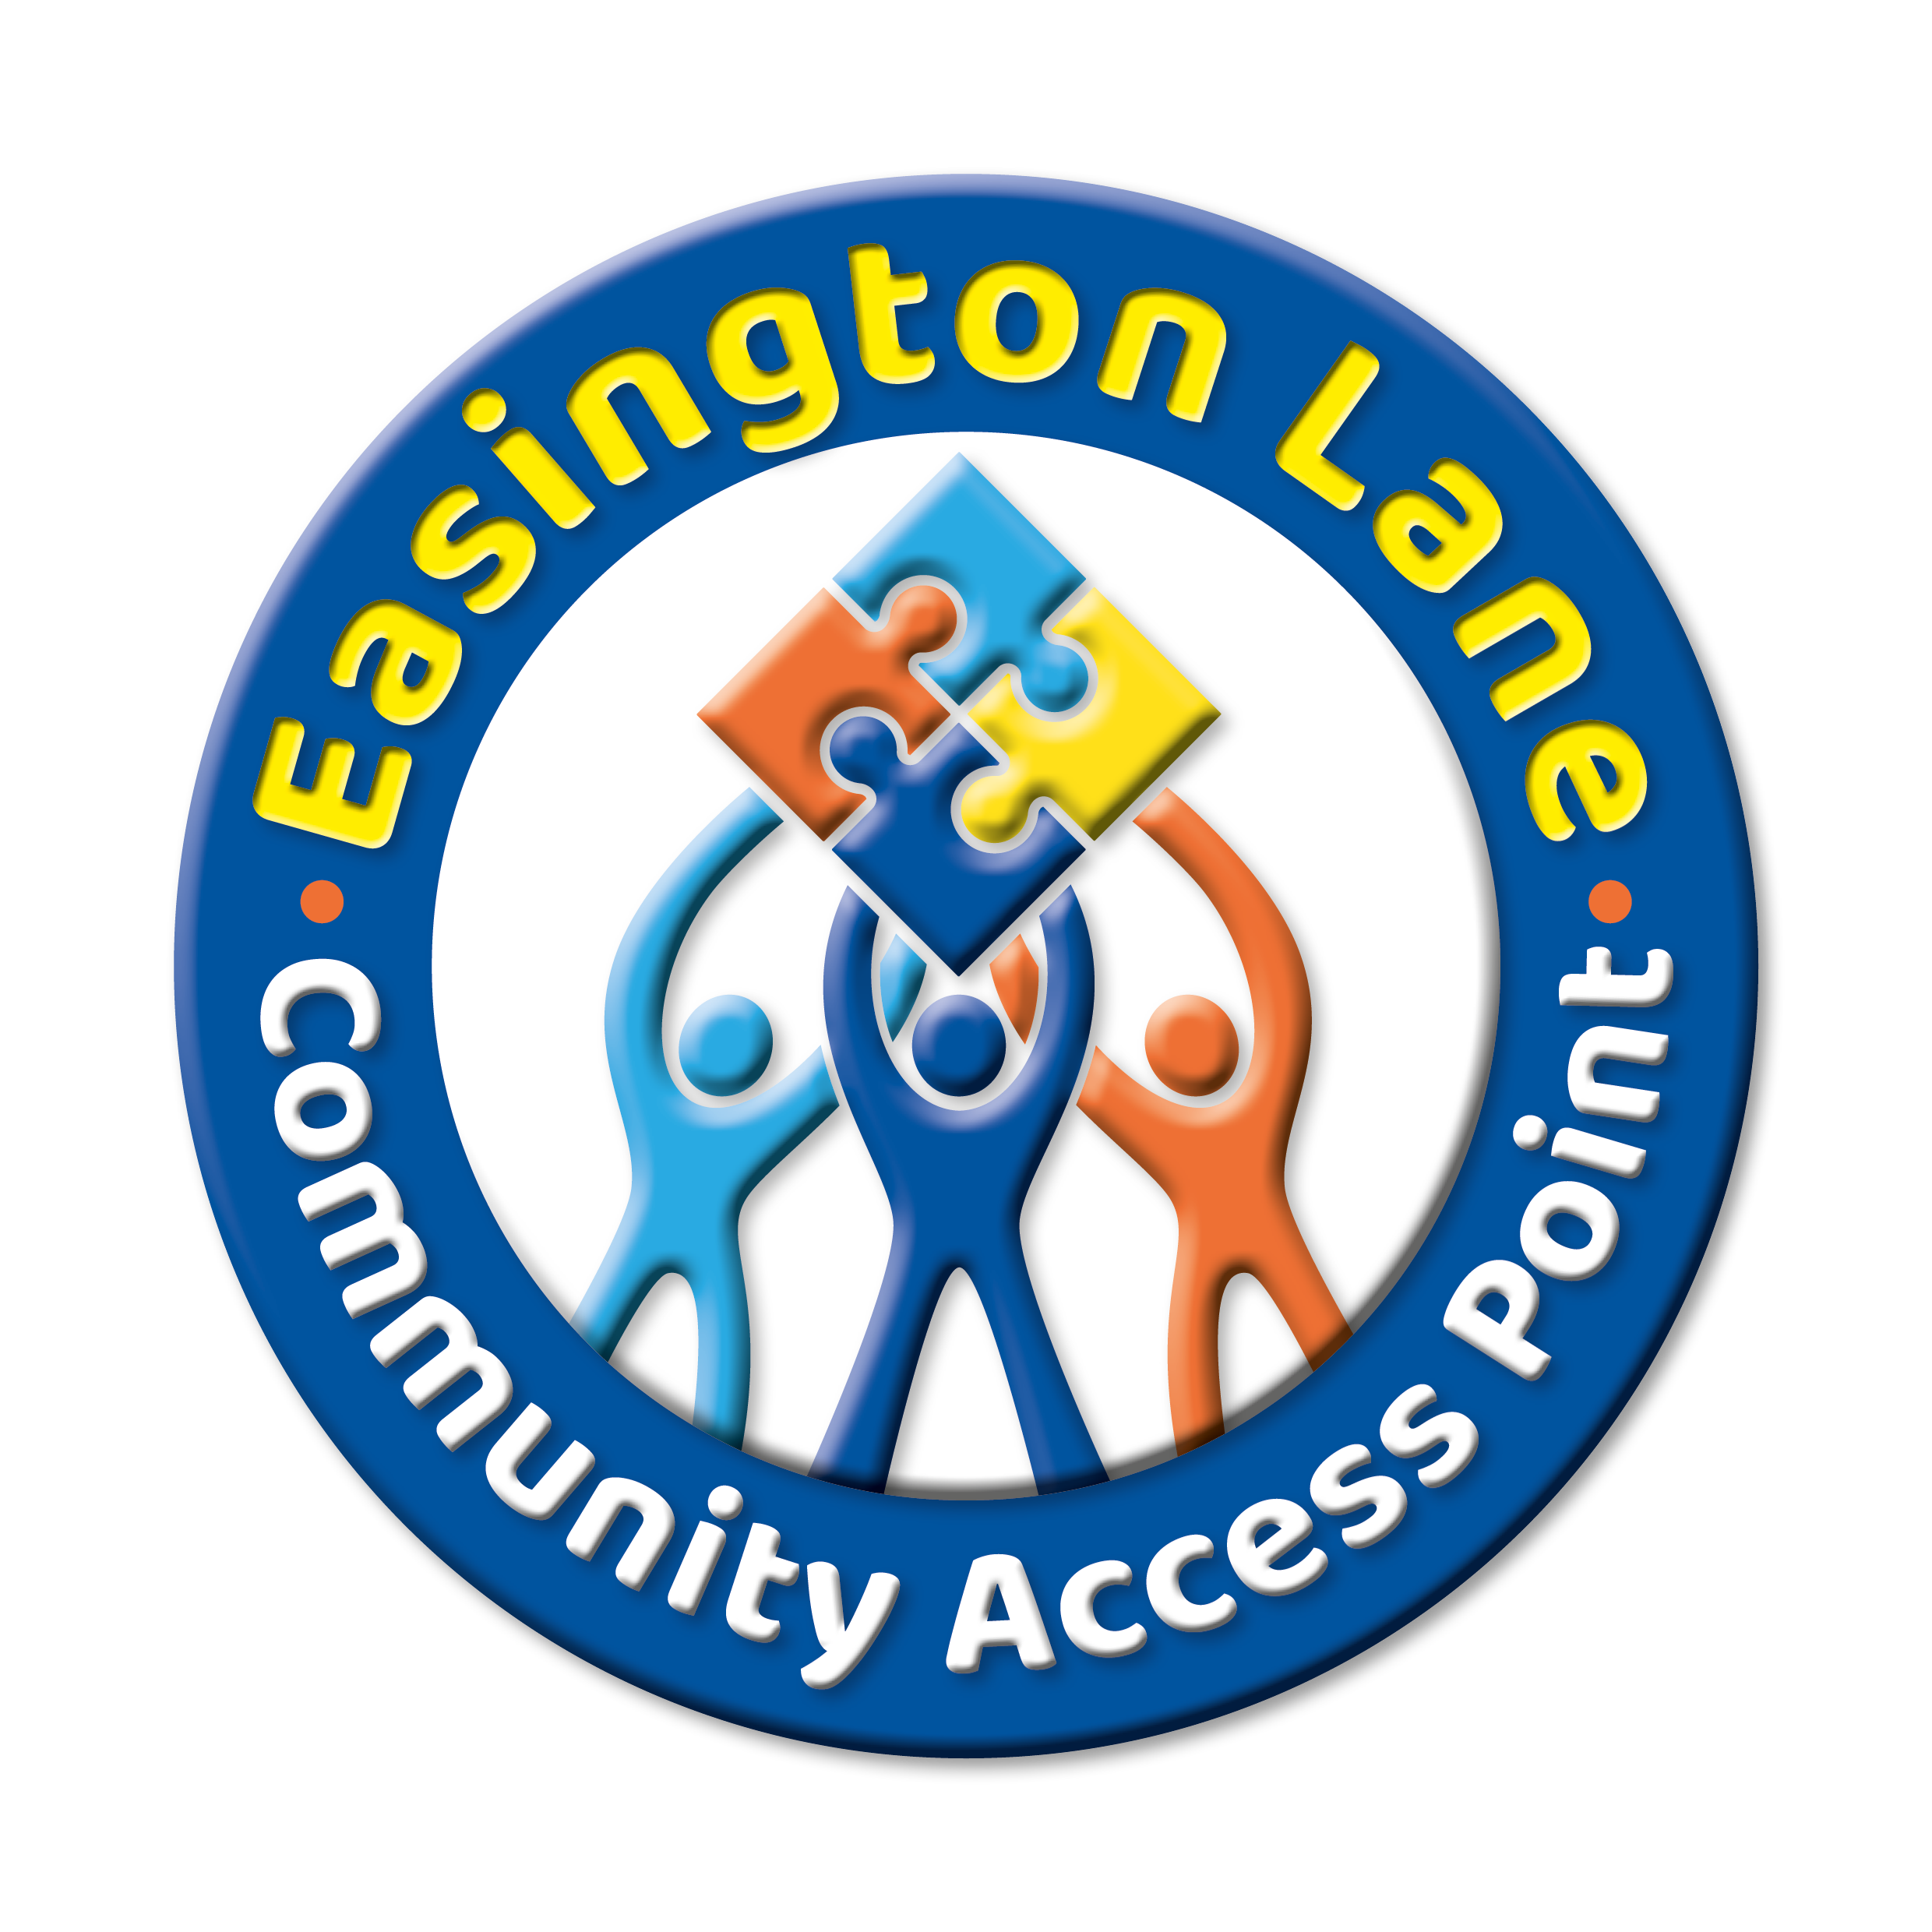 logo for Easington Lane Community Access Point